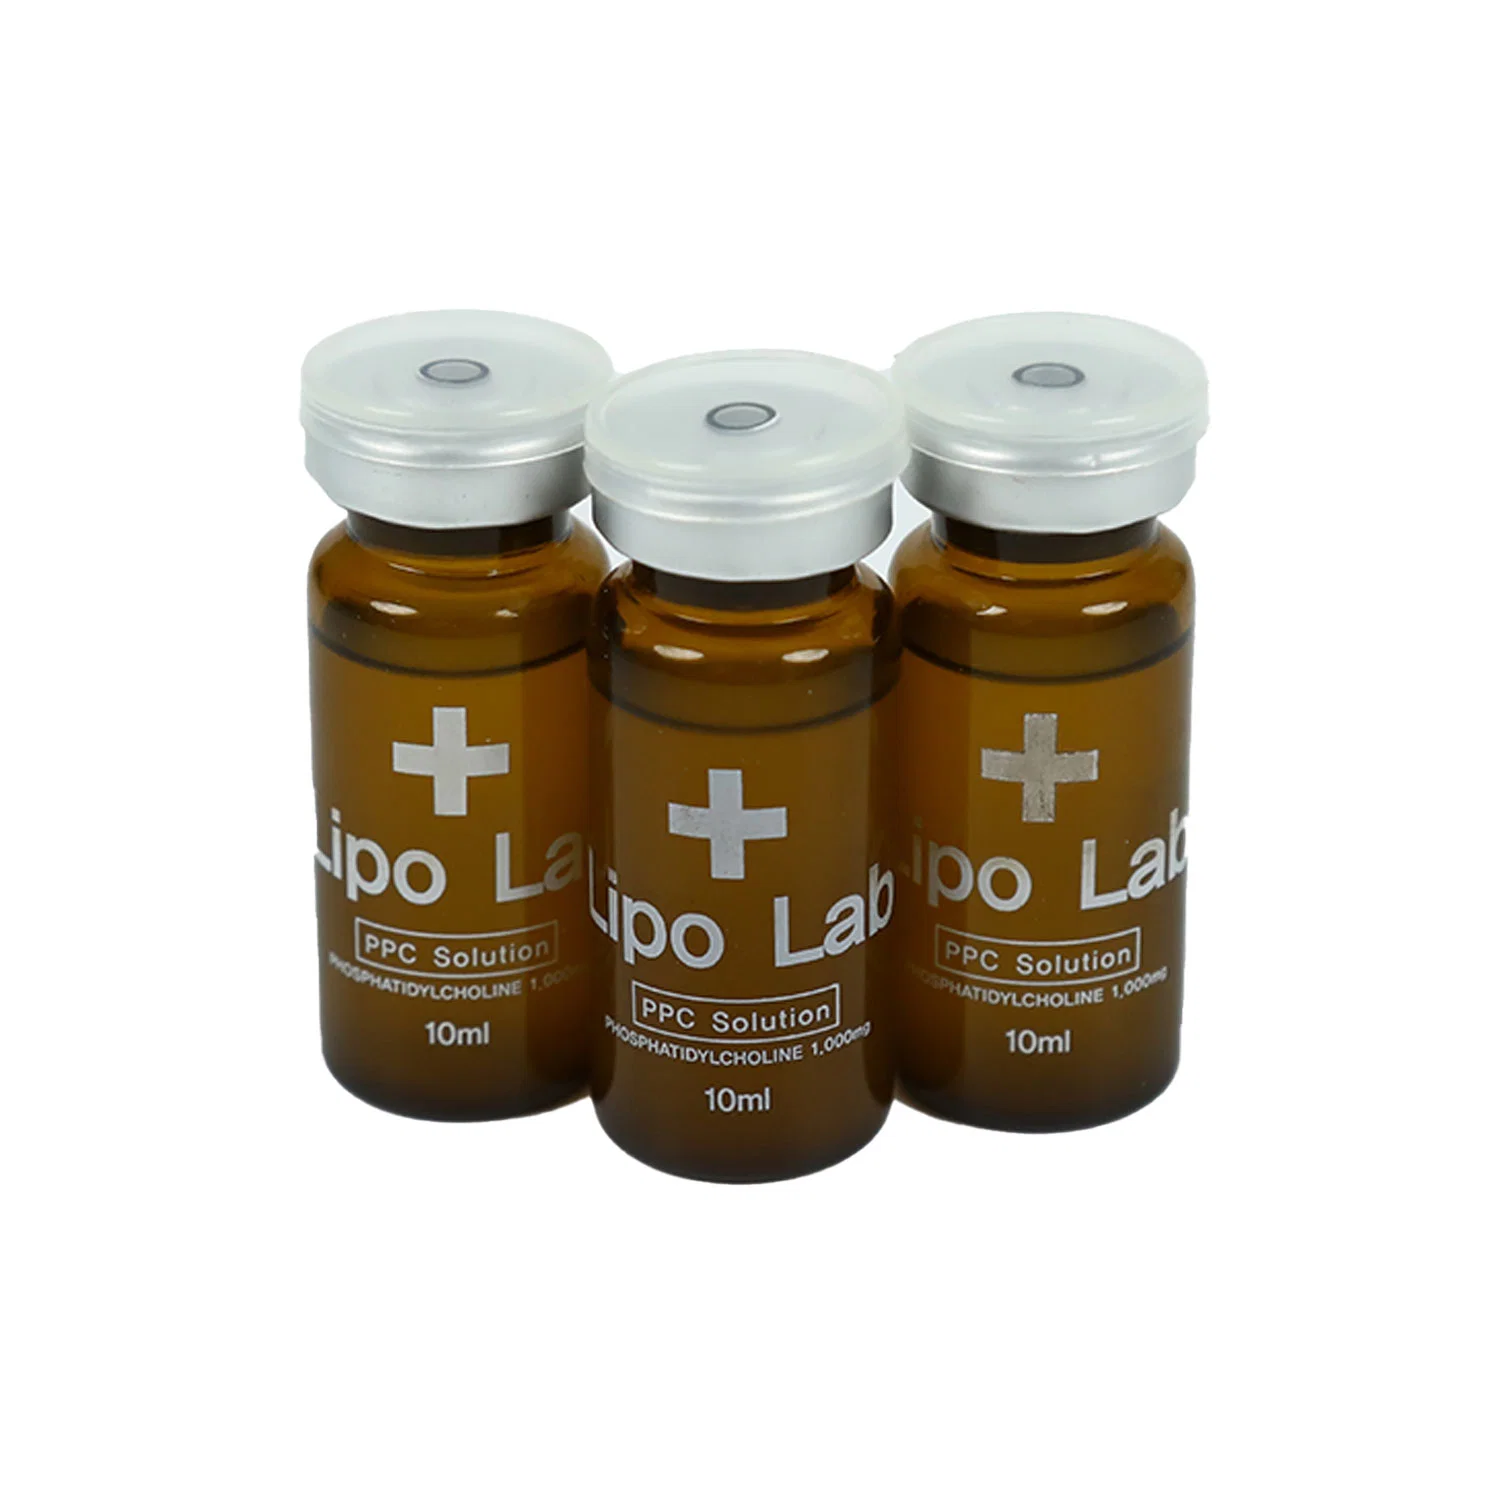 Lipo Lab Korea Hot selling لتخفيف الوزن منتجات ليمينغ أوكازيون